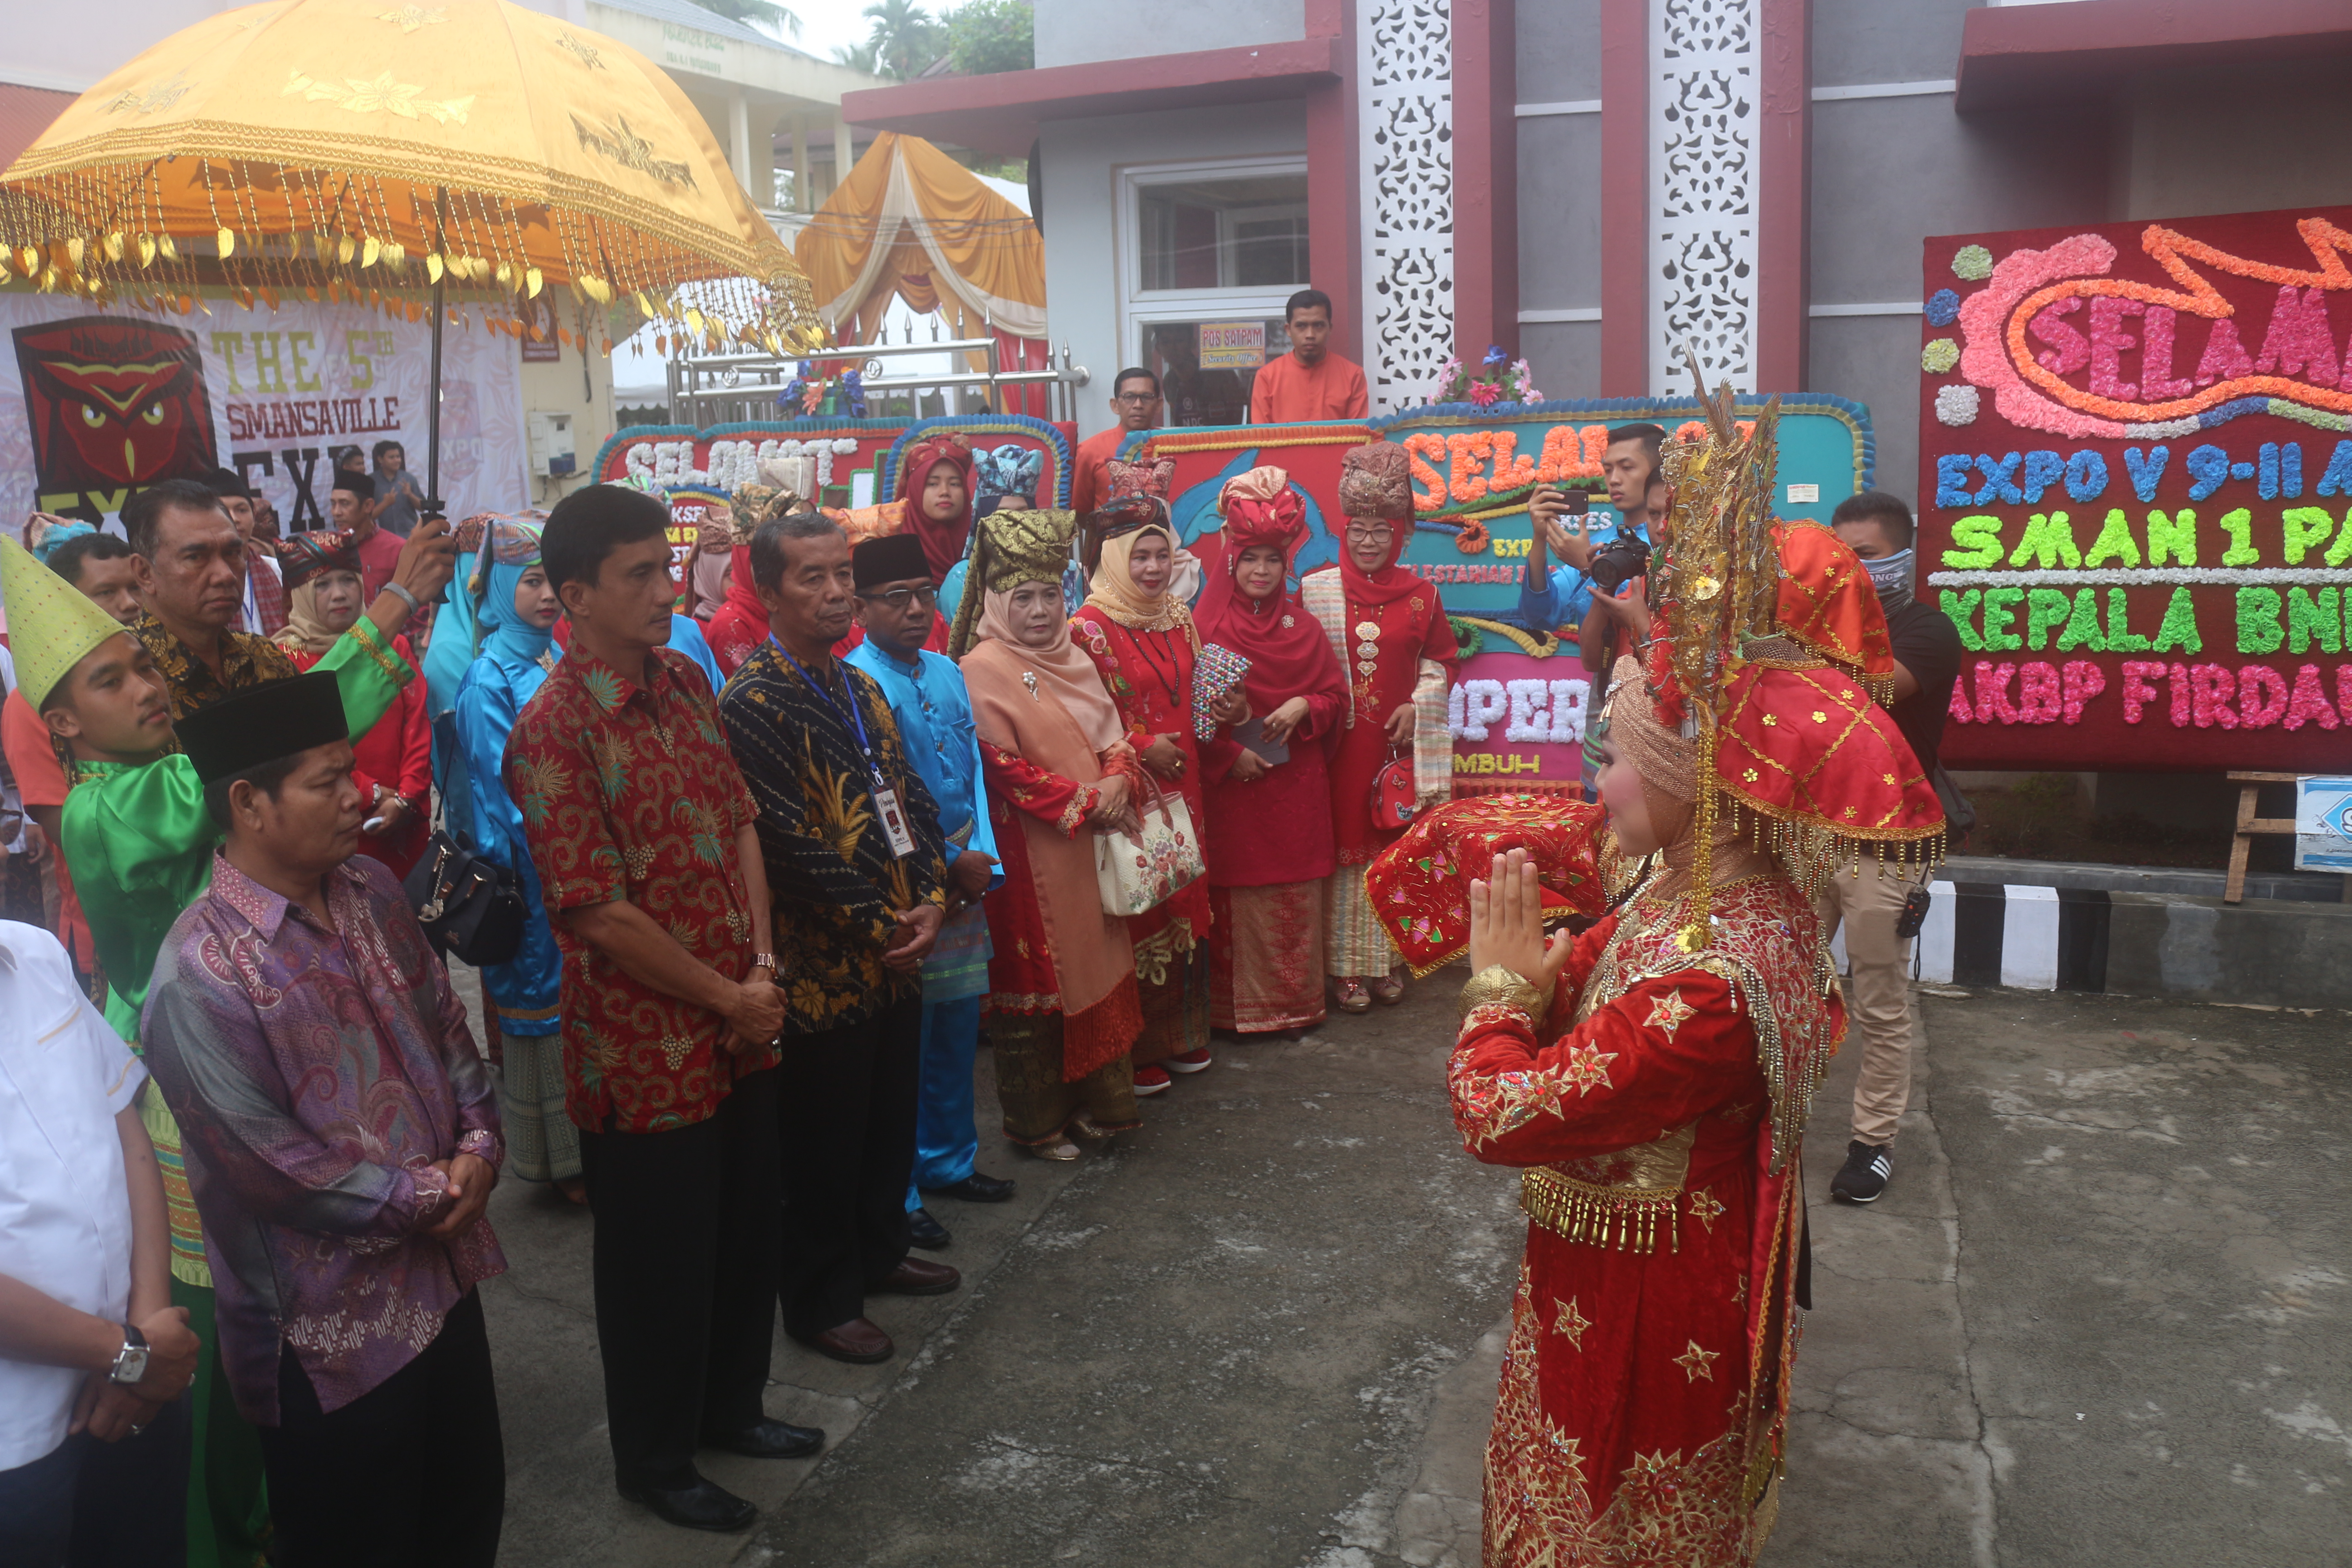 Pendukungan BPCB Sumatera Barat dalam Rangka EXPO V SMA N 1 Payakumbuh